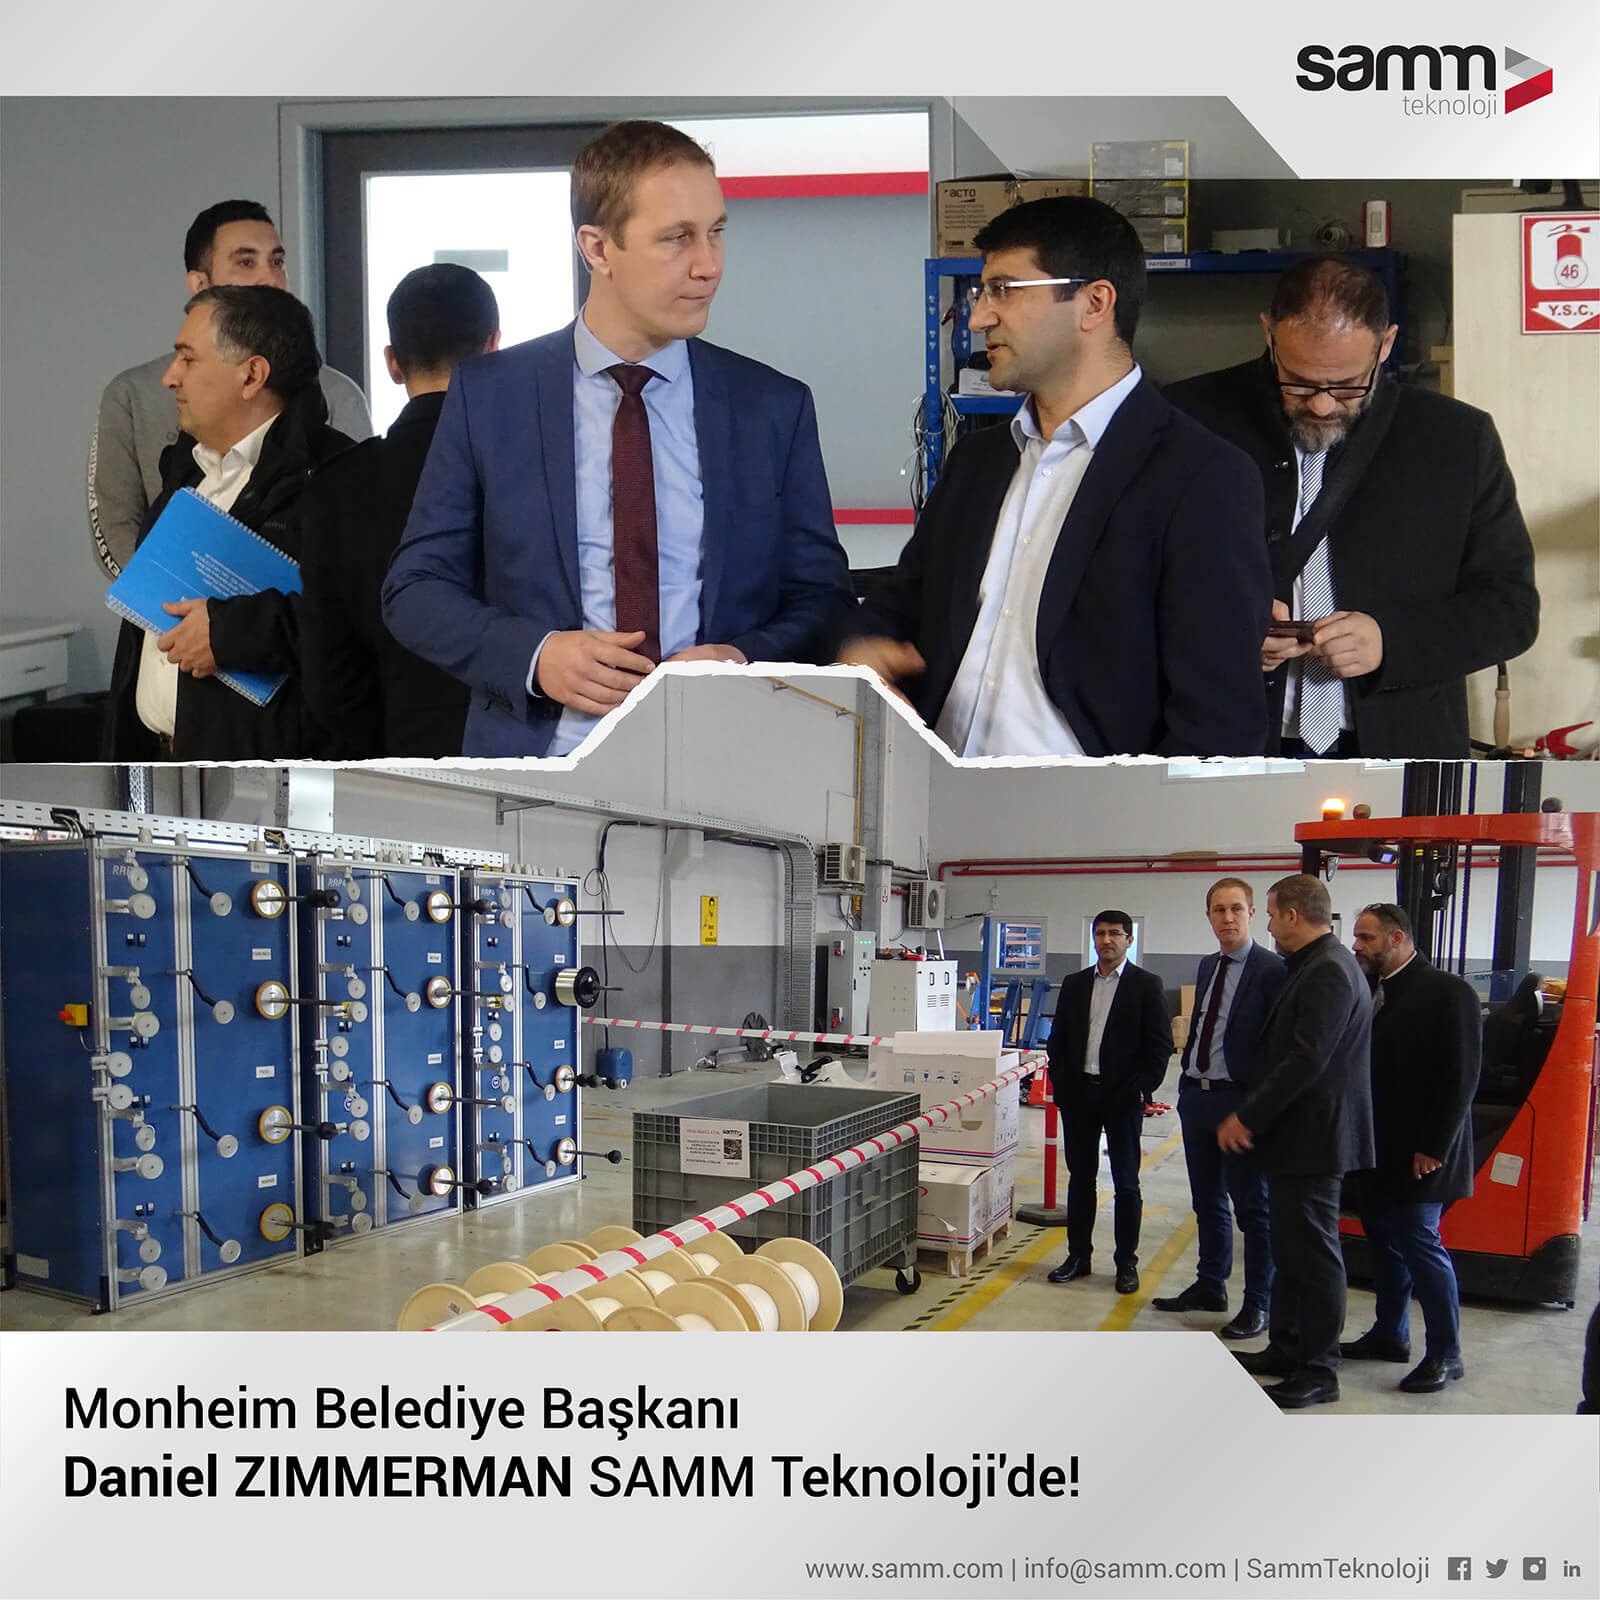 The Mayor of Monheim am Rhein Mr. Daniel Zimmerman Visits SAMM Teknoloji 2